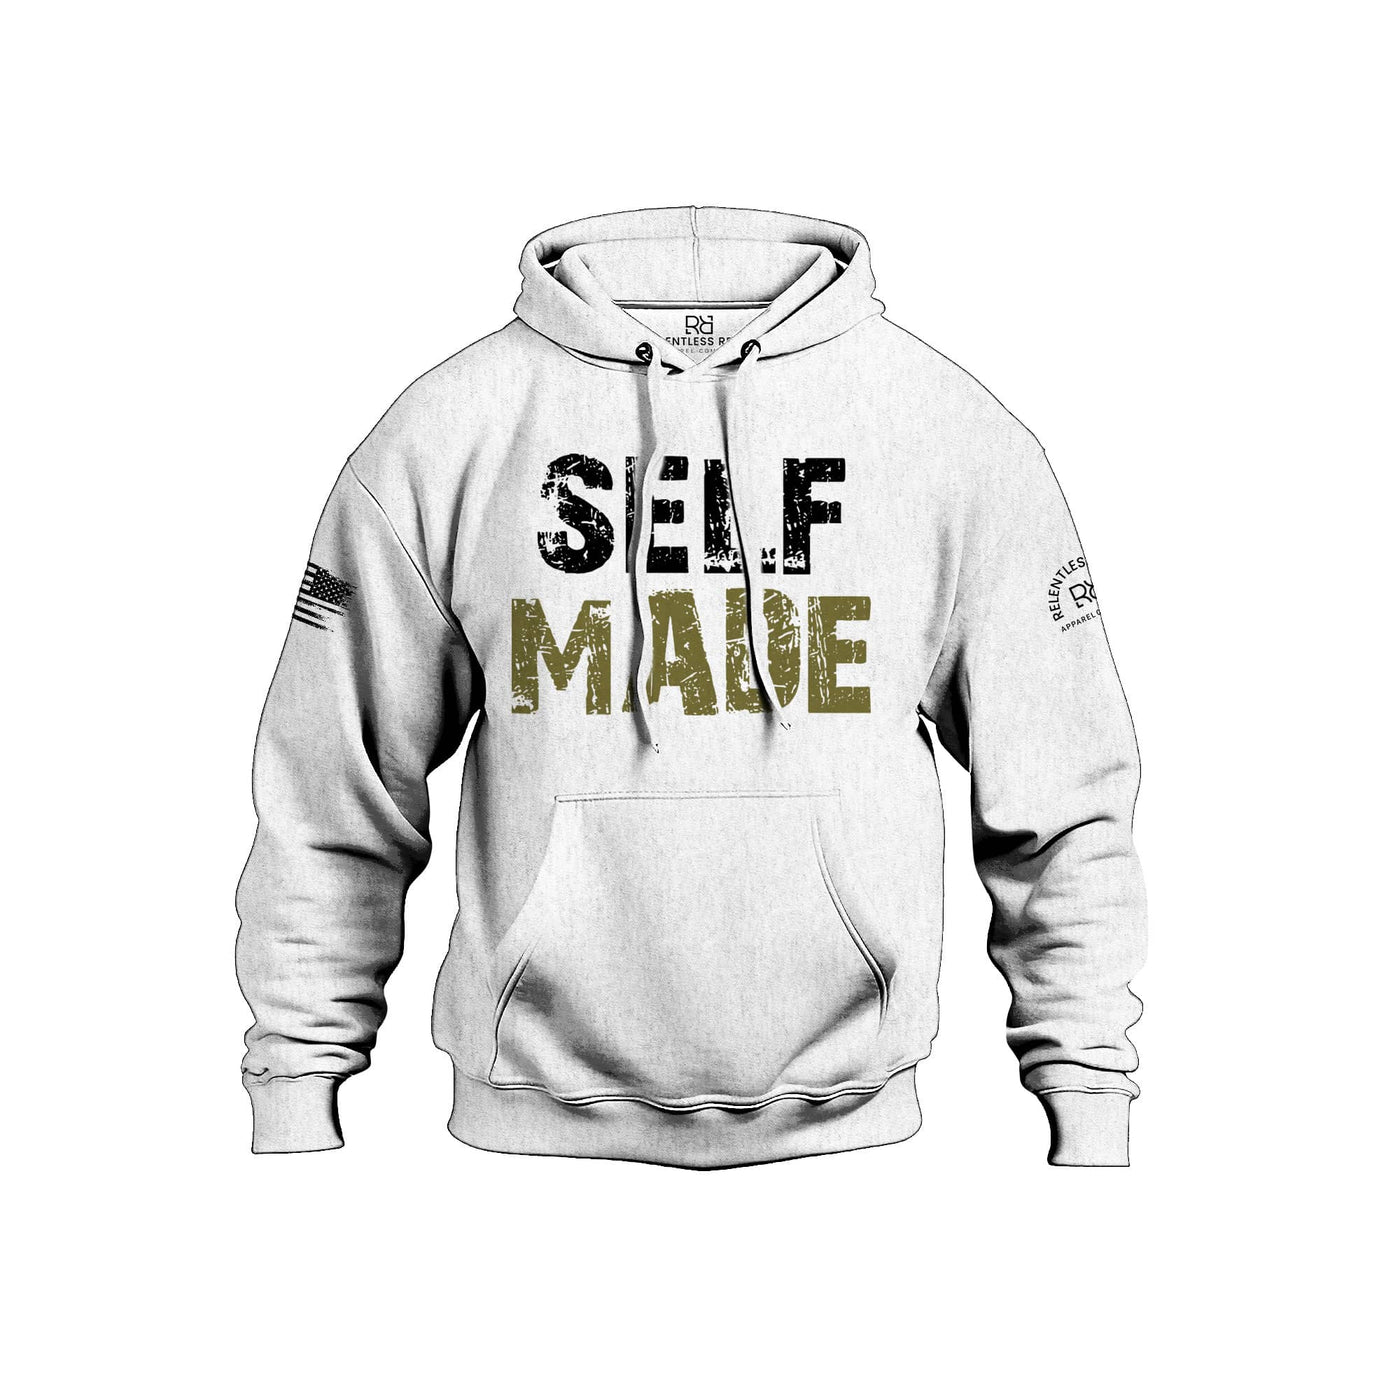 Self Made | Front | Men's Hoodie